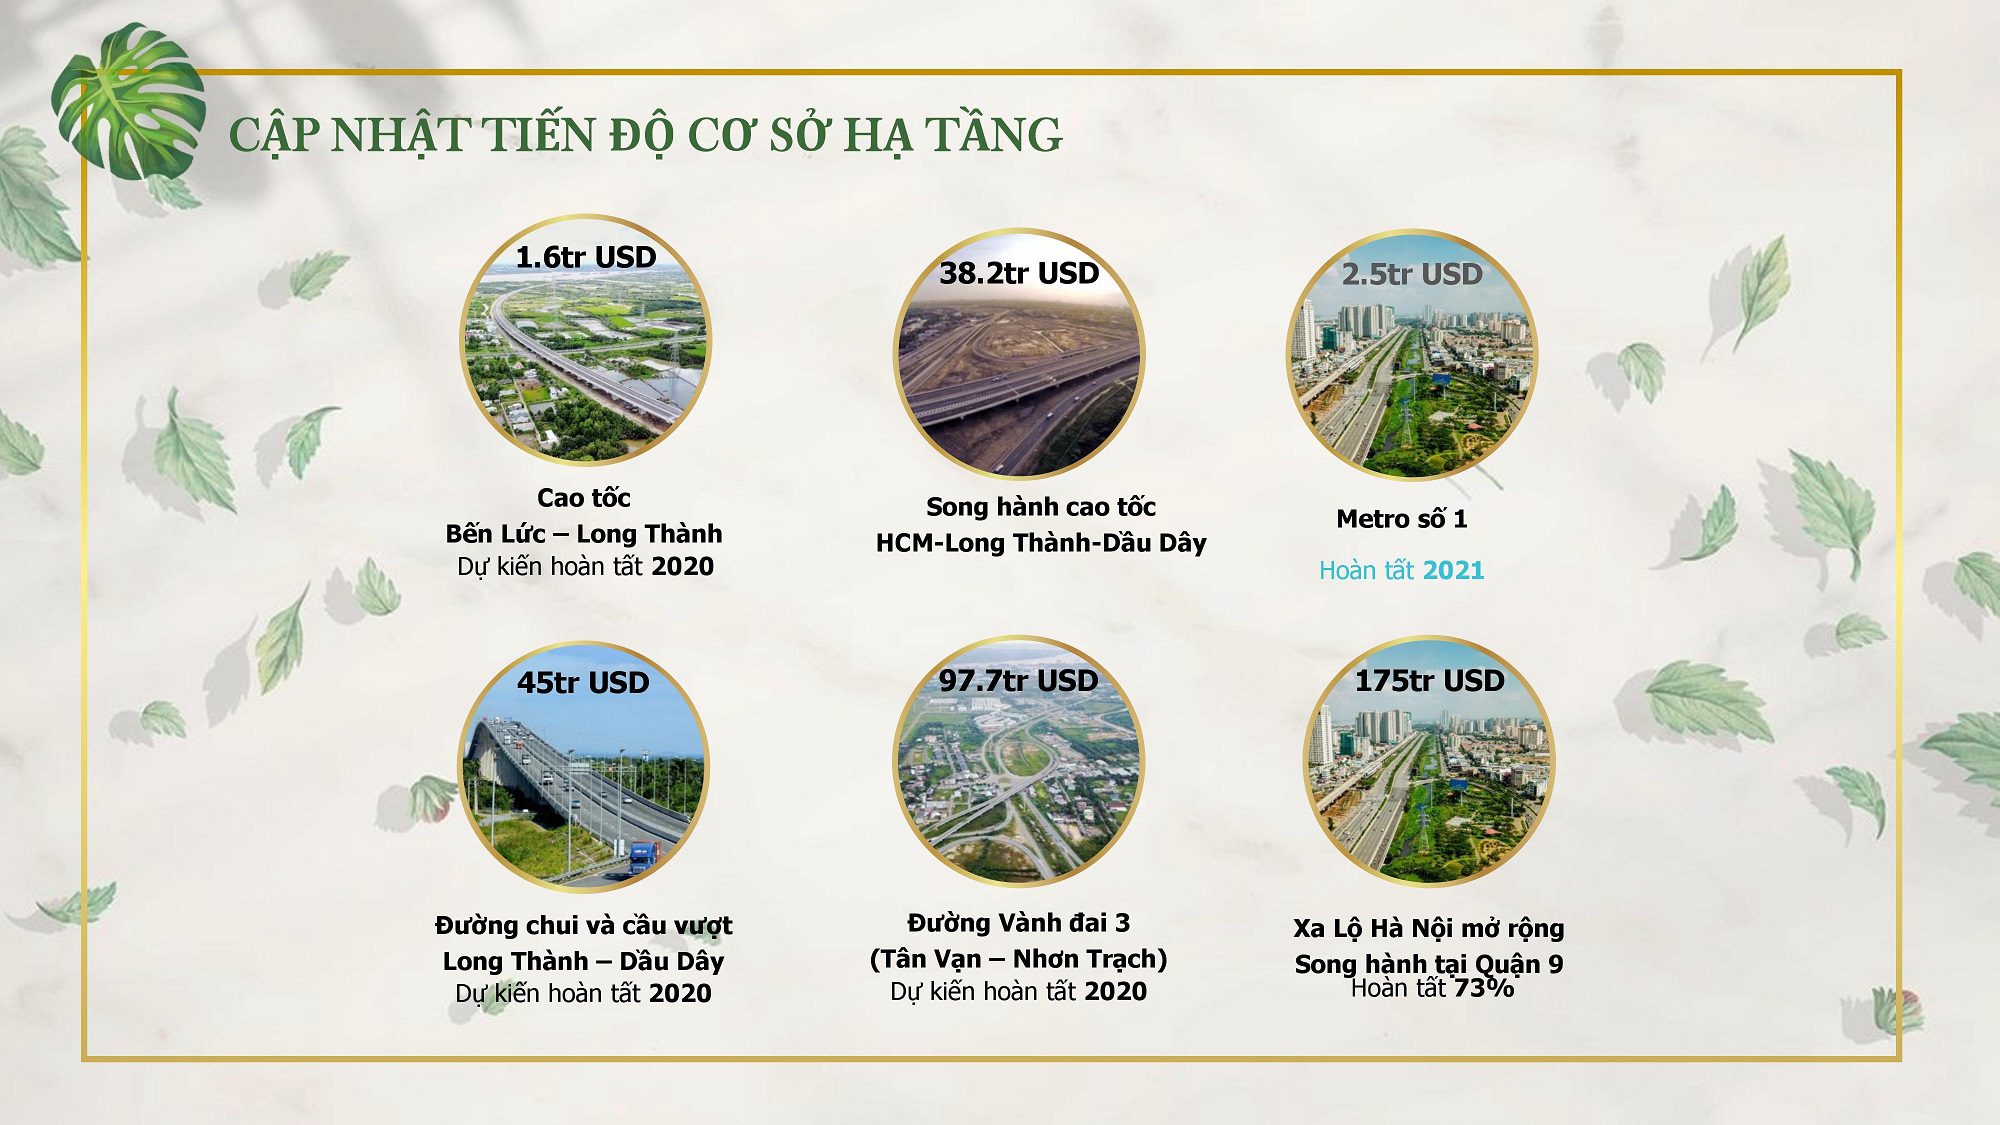 Tien Do Co So Ha Tang